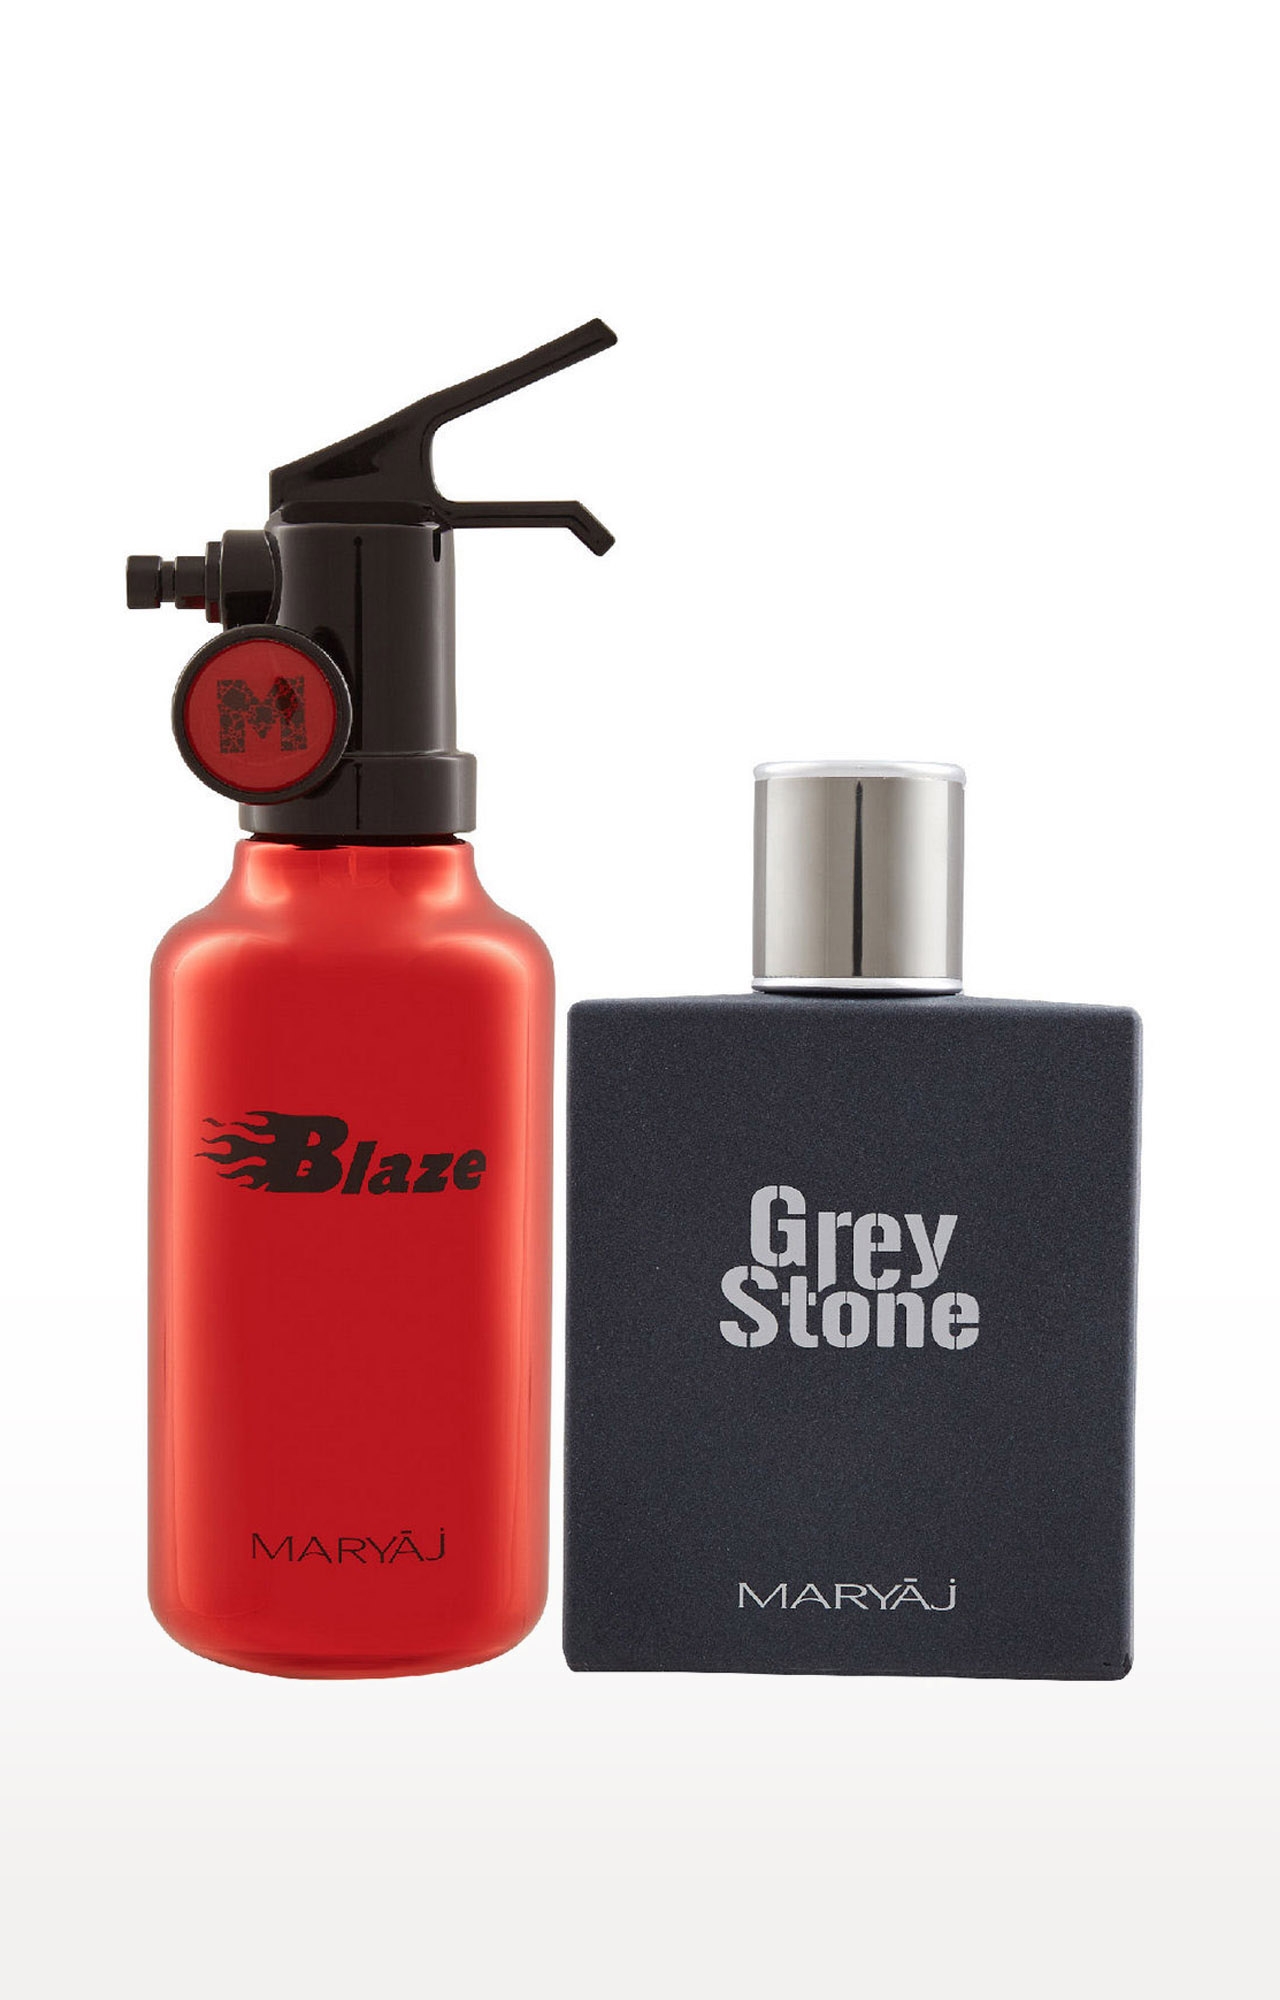 Maryaj Blaze Eau De Parfum Perfume 100ml for Men and Maryaj Grey Stone Eau De Parfum Perfume 100ml for Men